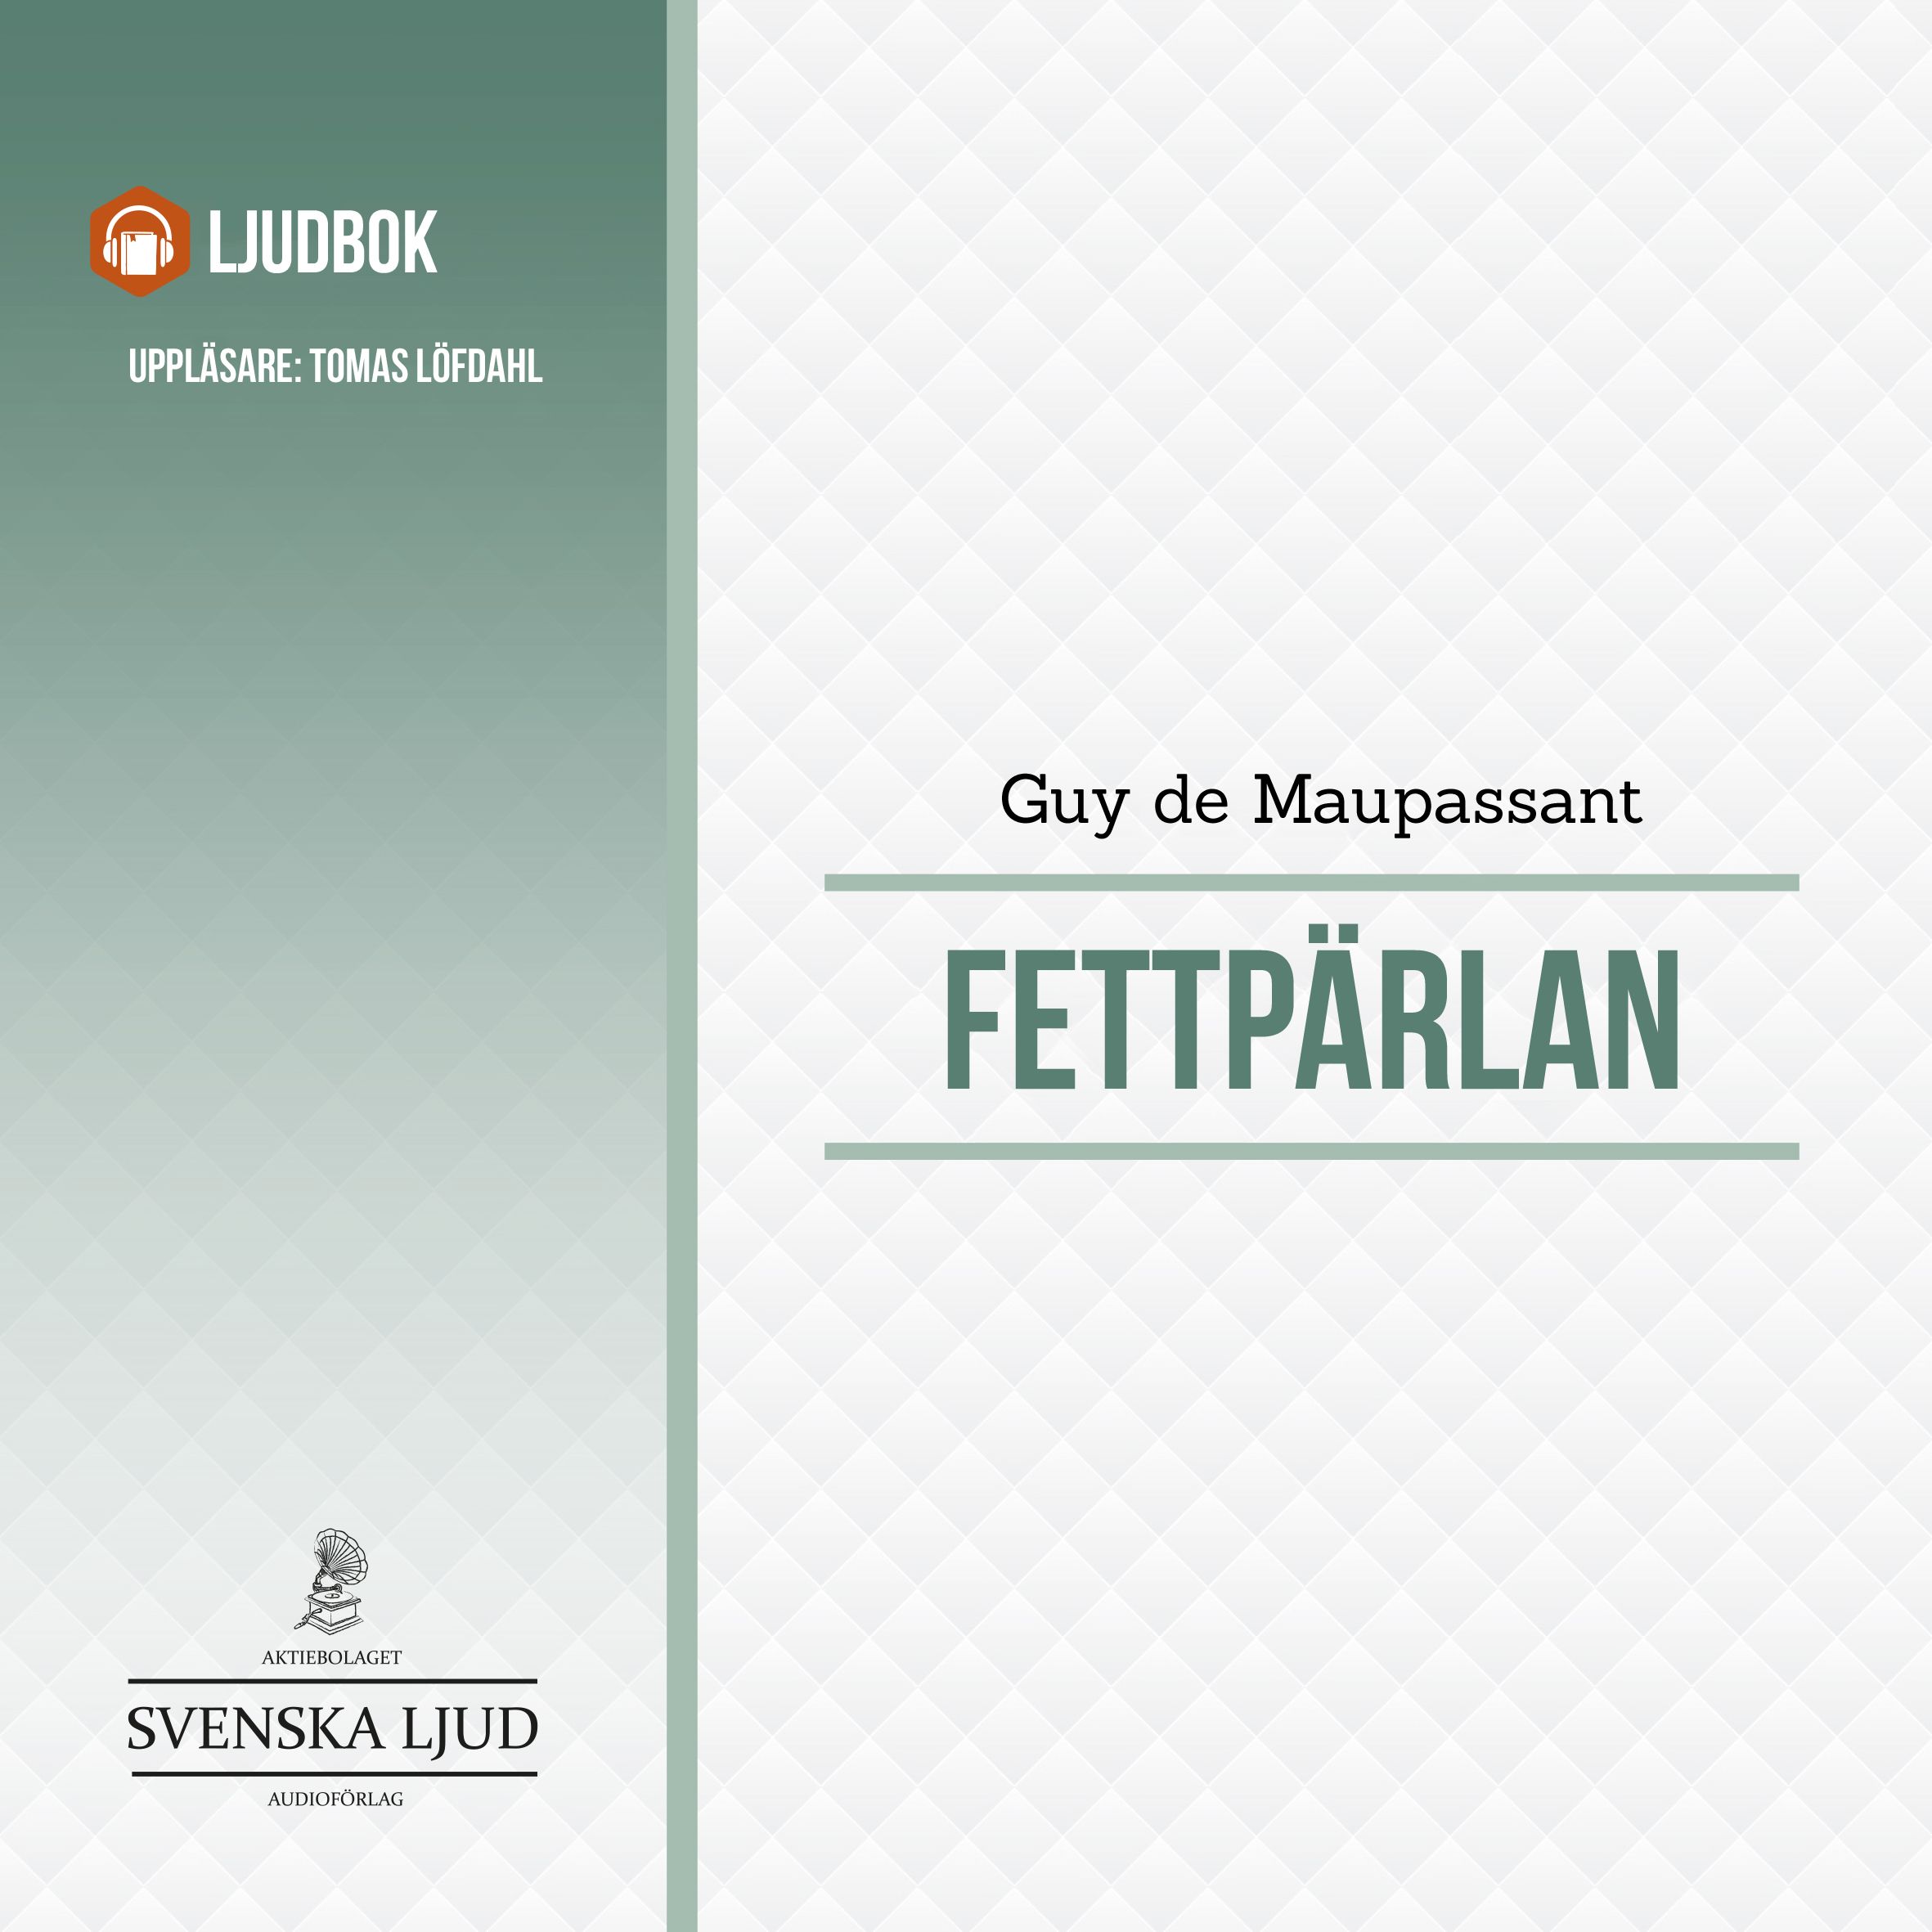 Fettpärlan, audiobook by Guy de Maupassant